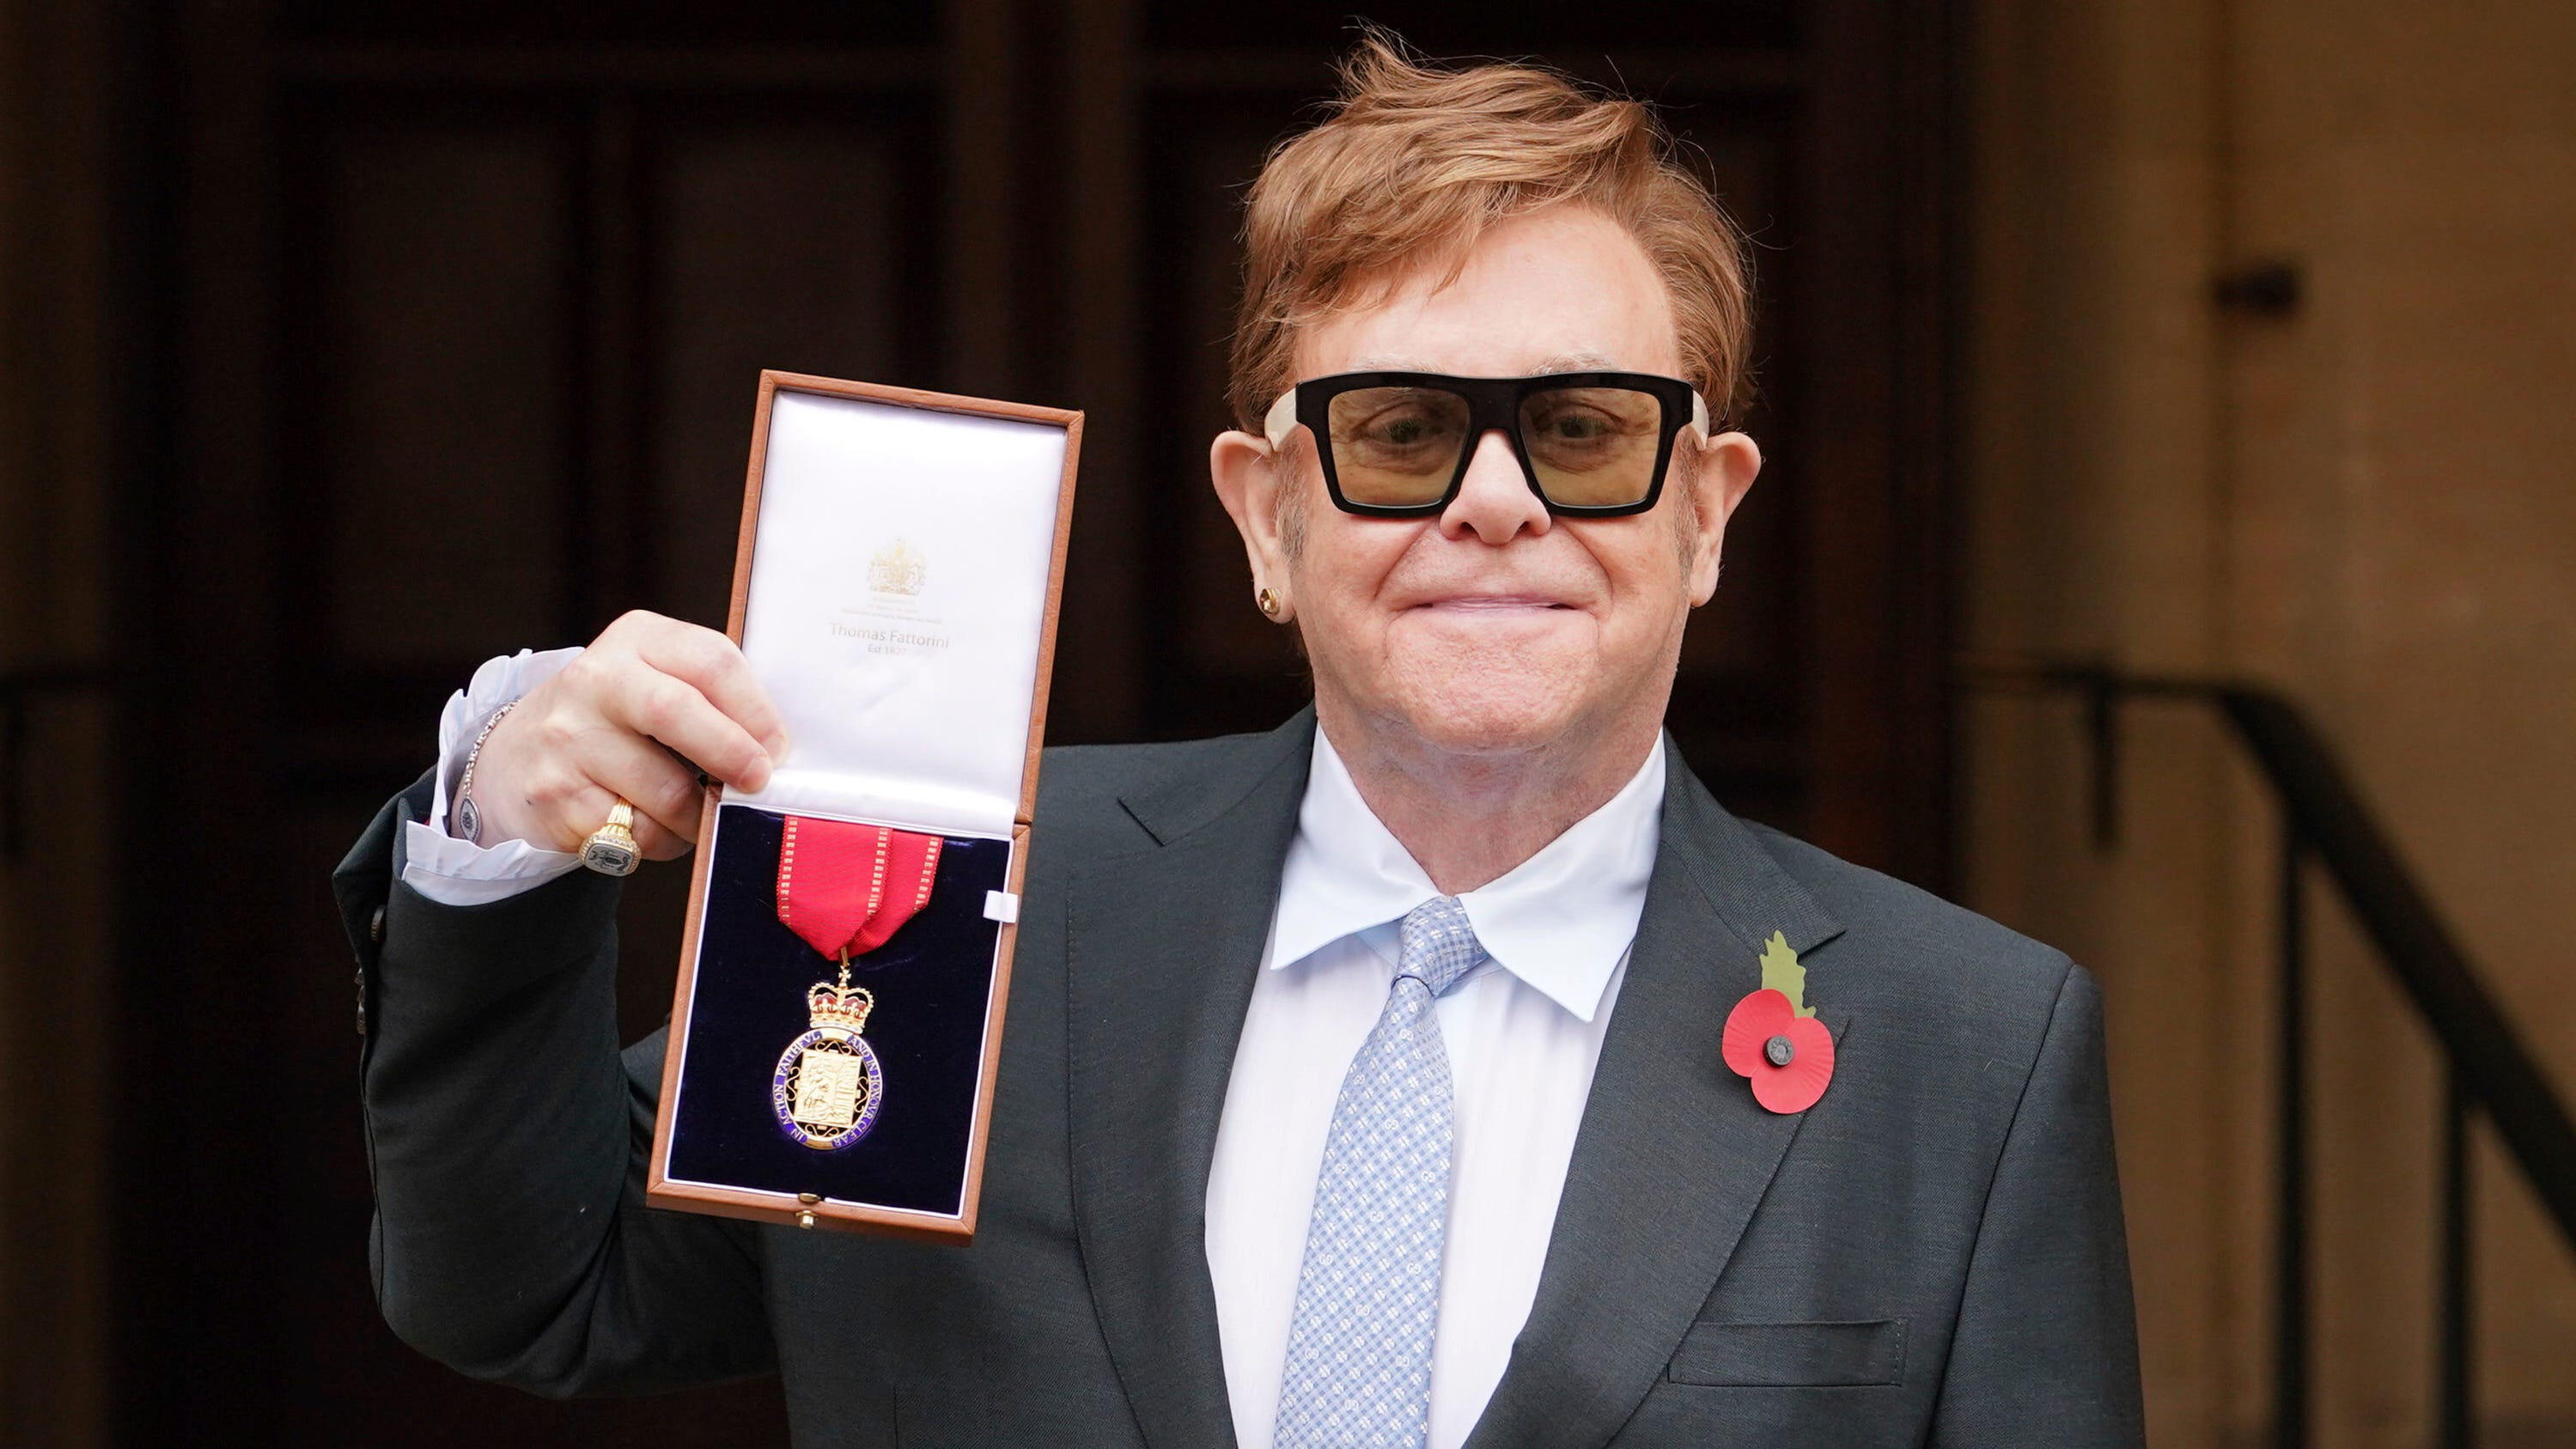 Elton John receives highest award bestowed by Queen Elizabeth